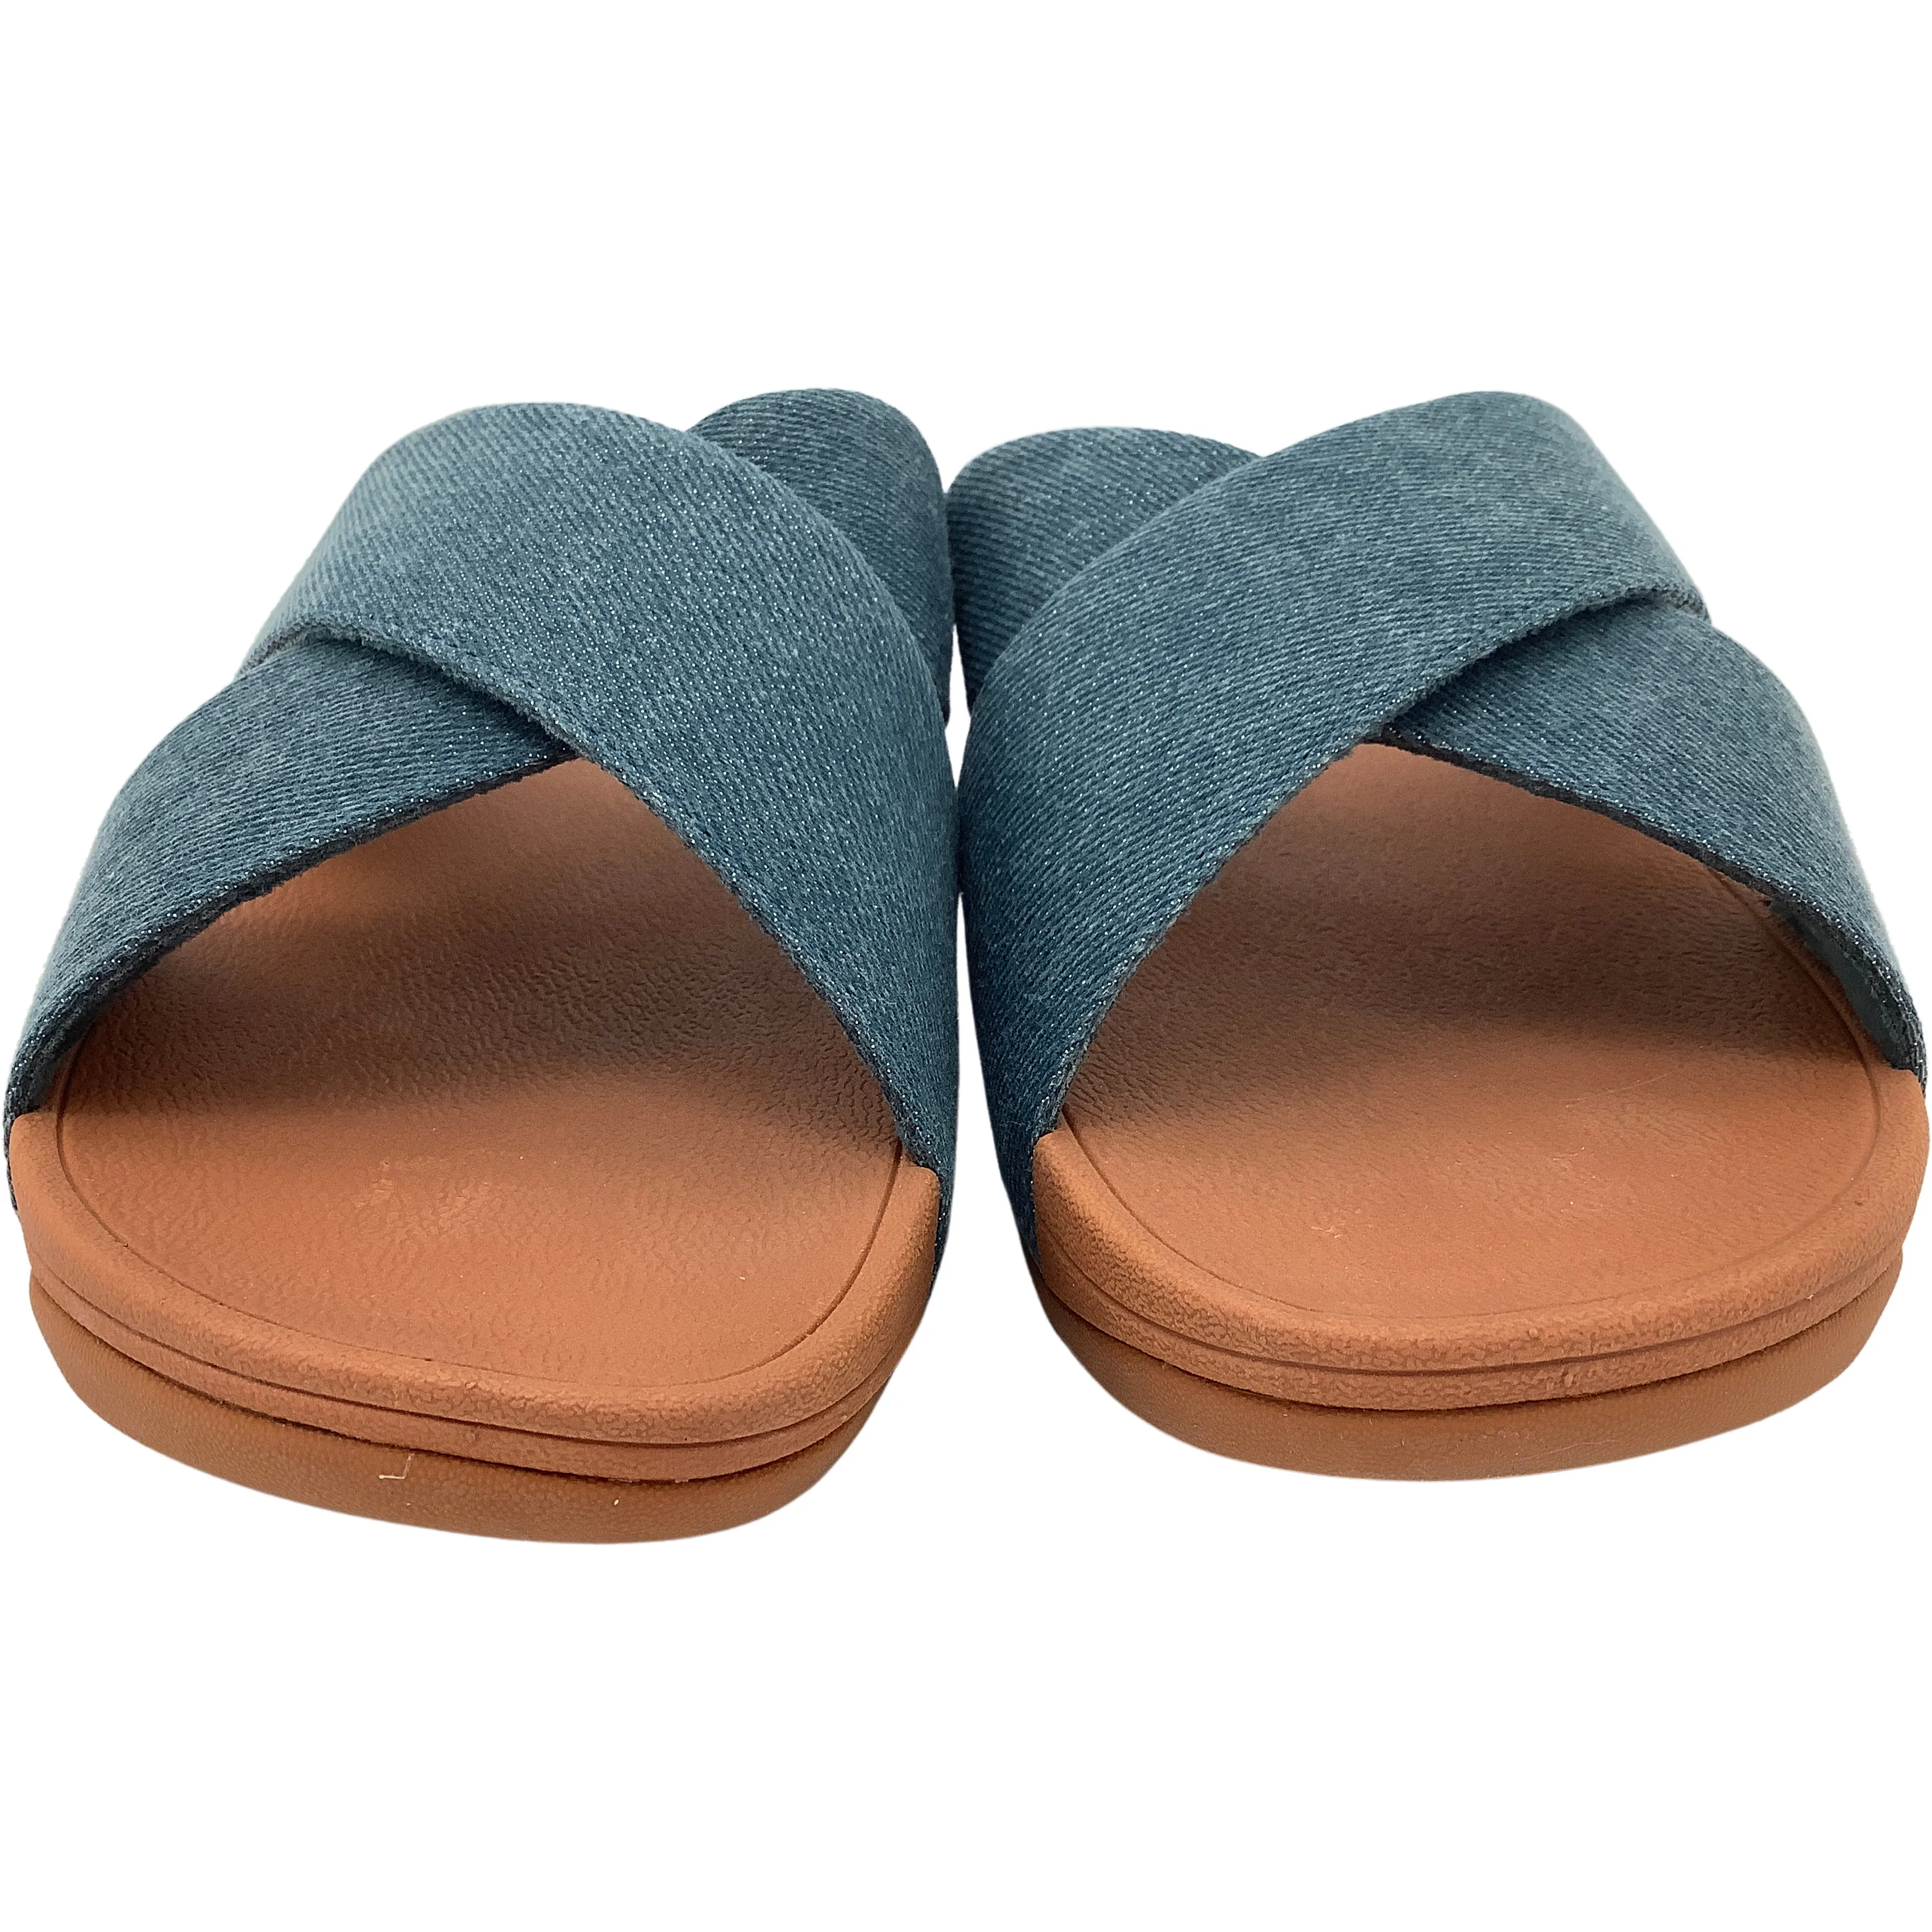 FitFlop Women's Sandals / Brown and Denim / Women's Flip Flops / Size 9